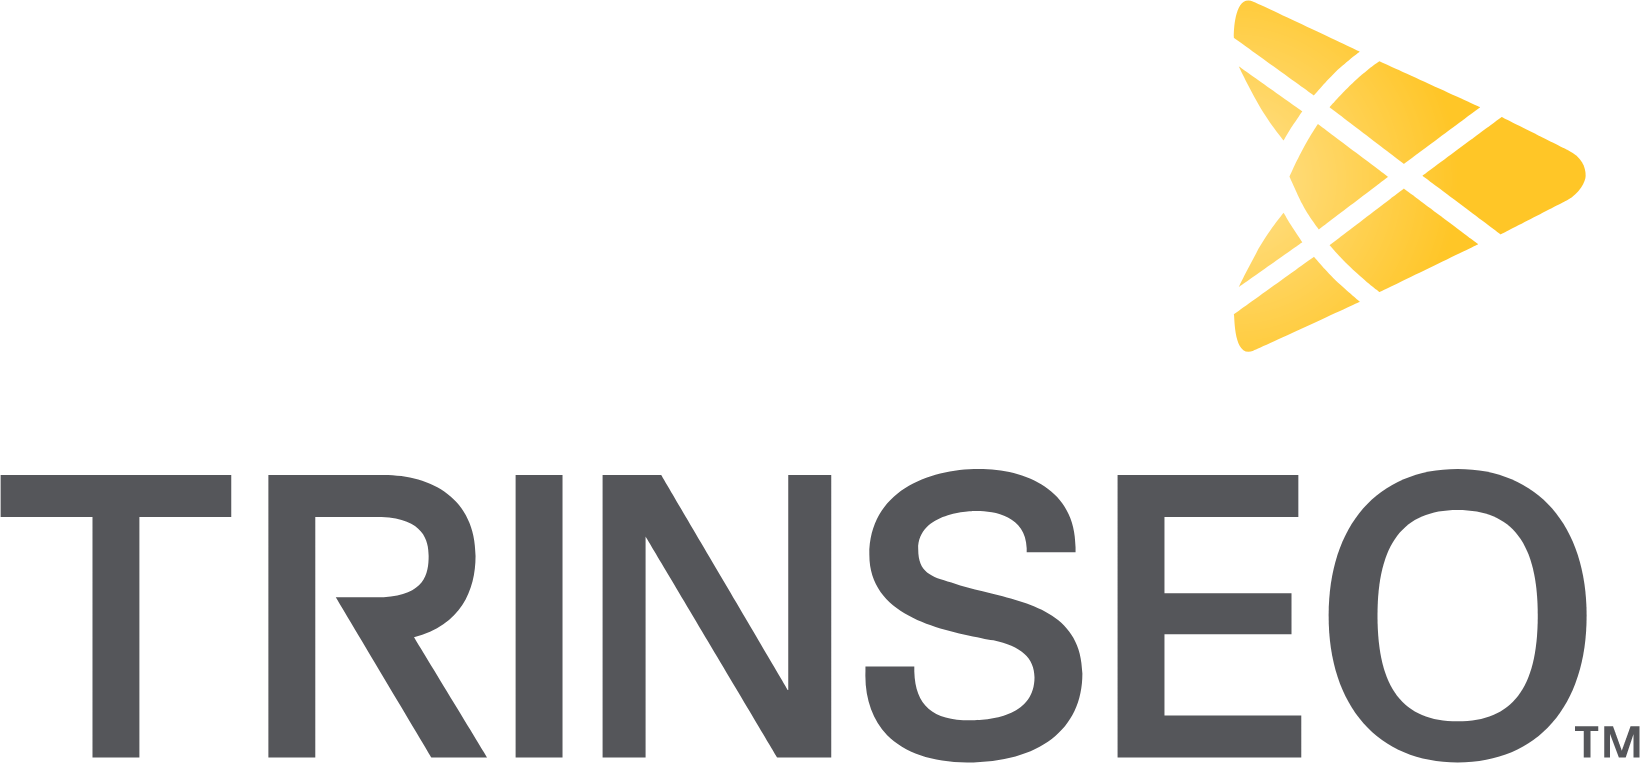 Trinseo logo large (transparent PNG)